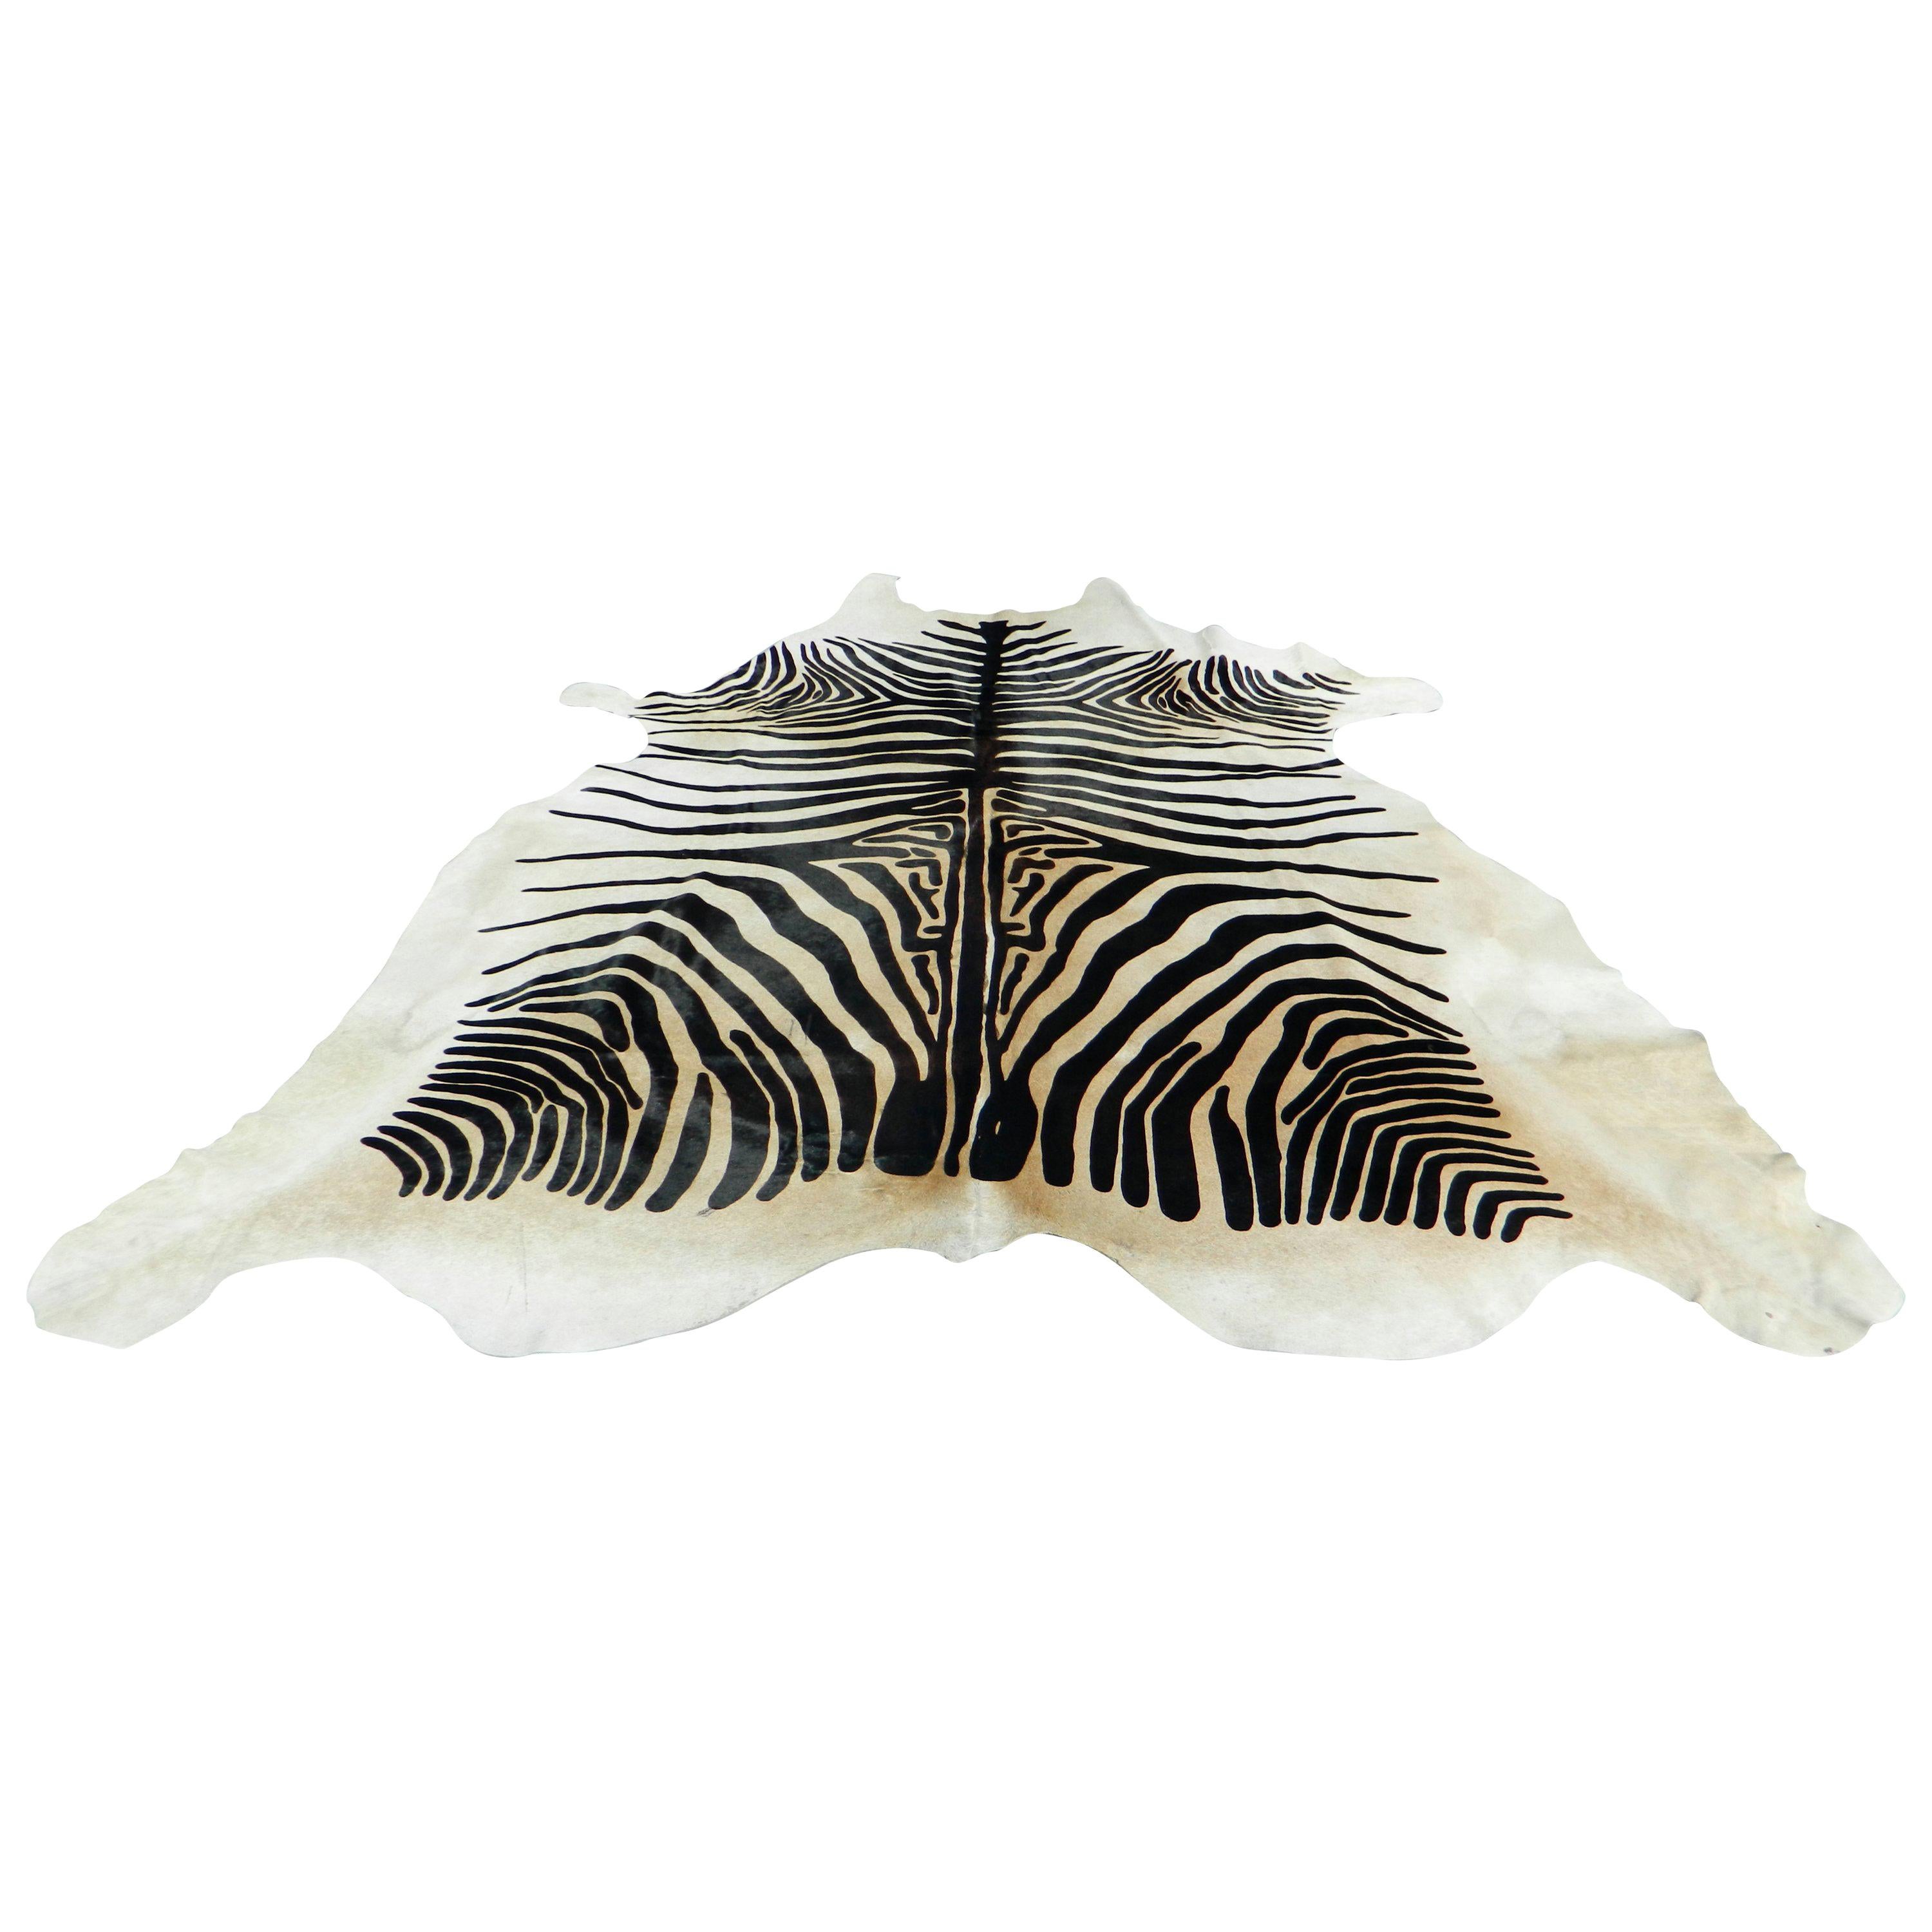 Printed Zebra Cow Hide Rug For Sale